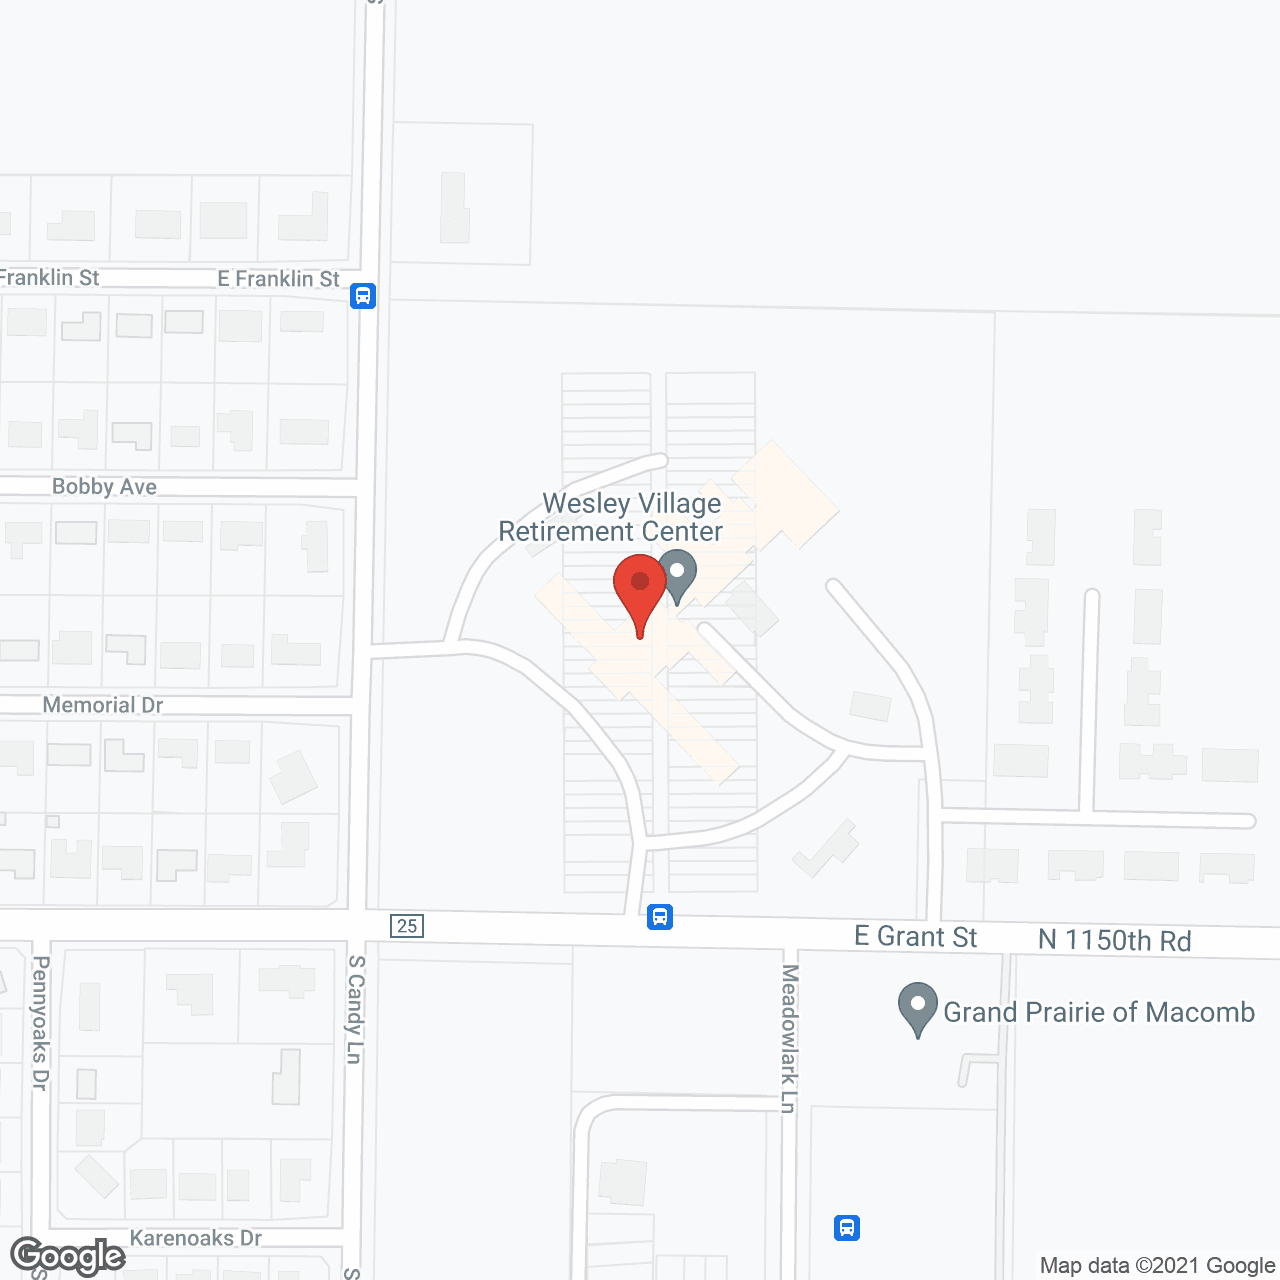 Wesley Village in google map